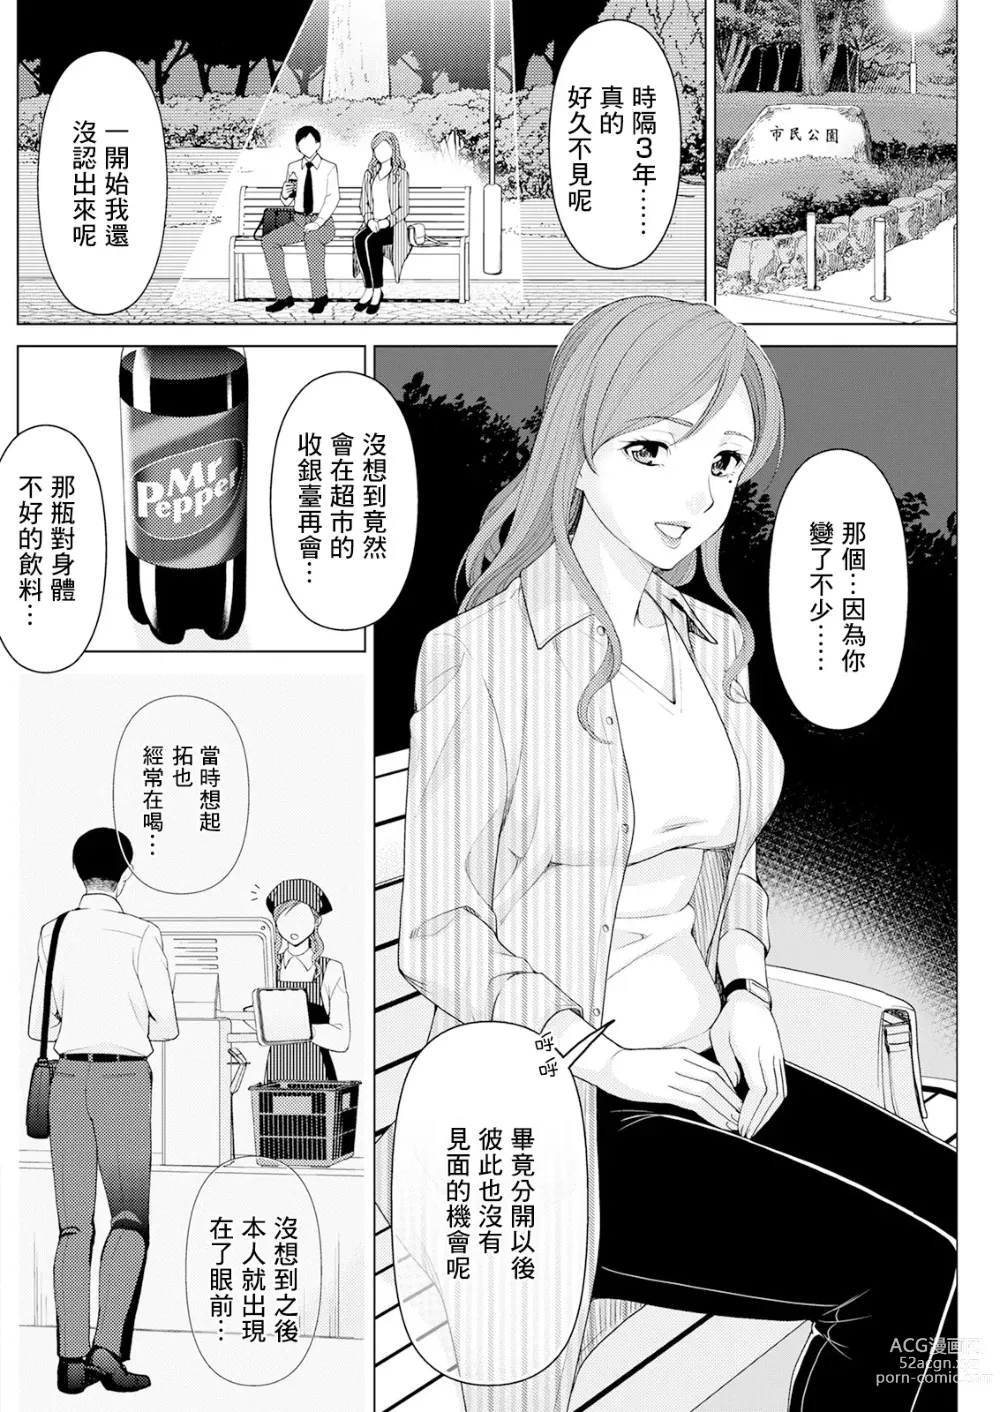 Page 2 of manga Kawari, Hateru.